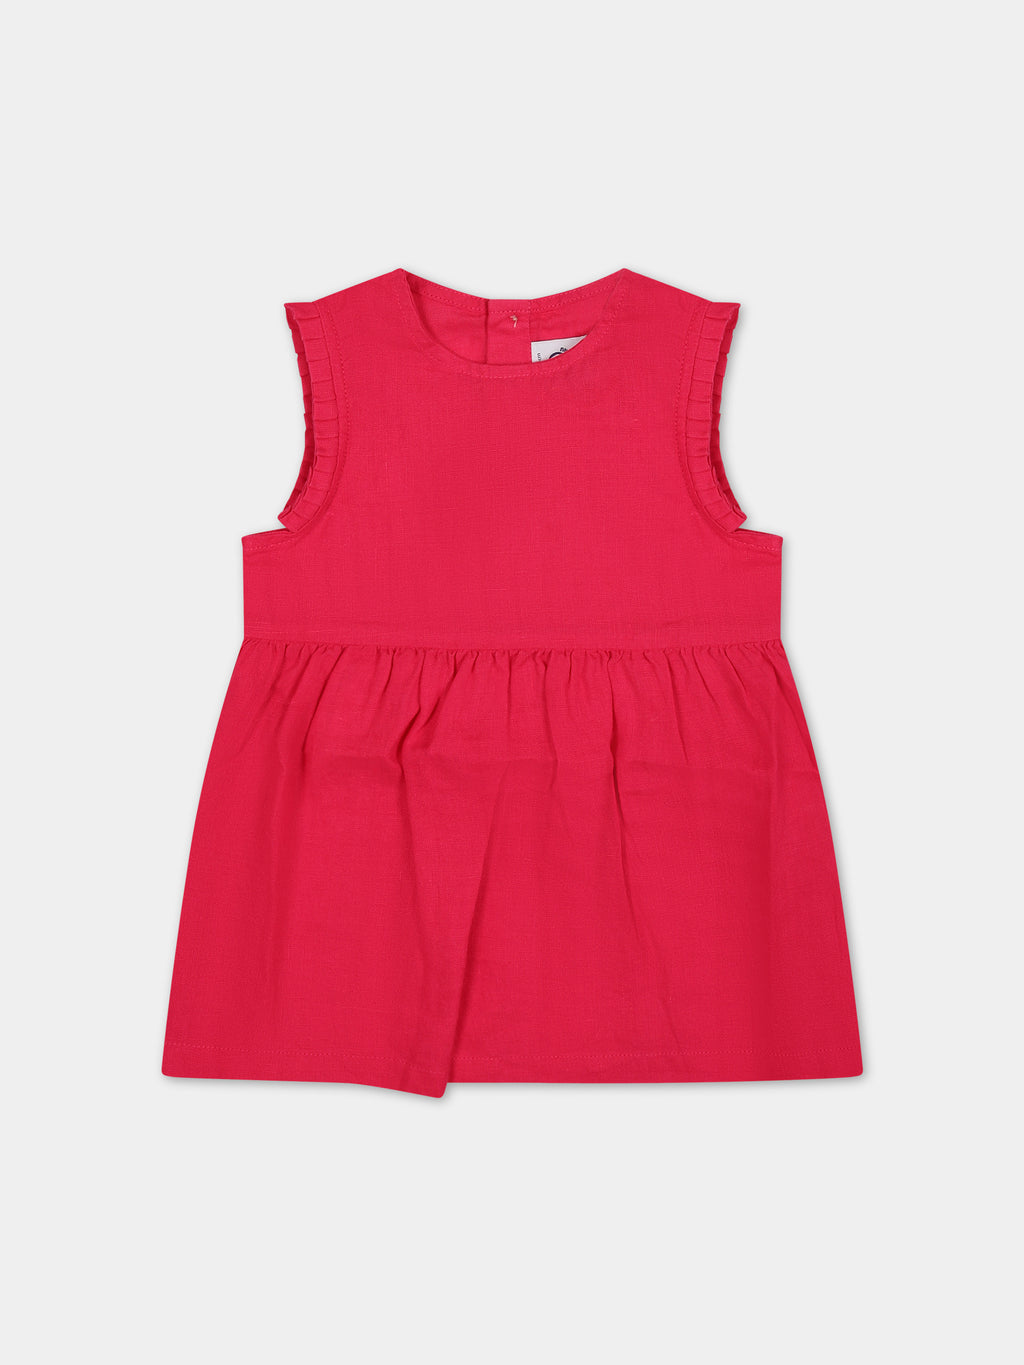 Fuchsia dress for baby girl with ruffles